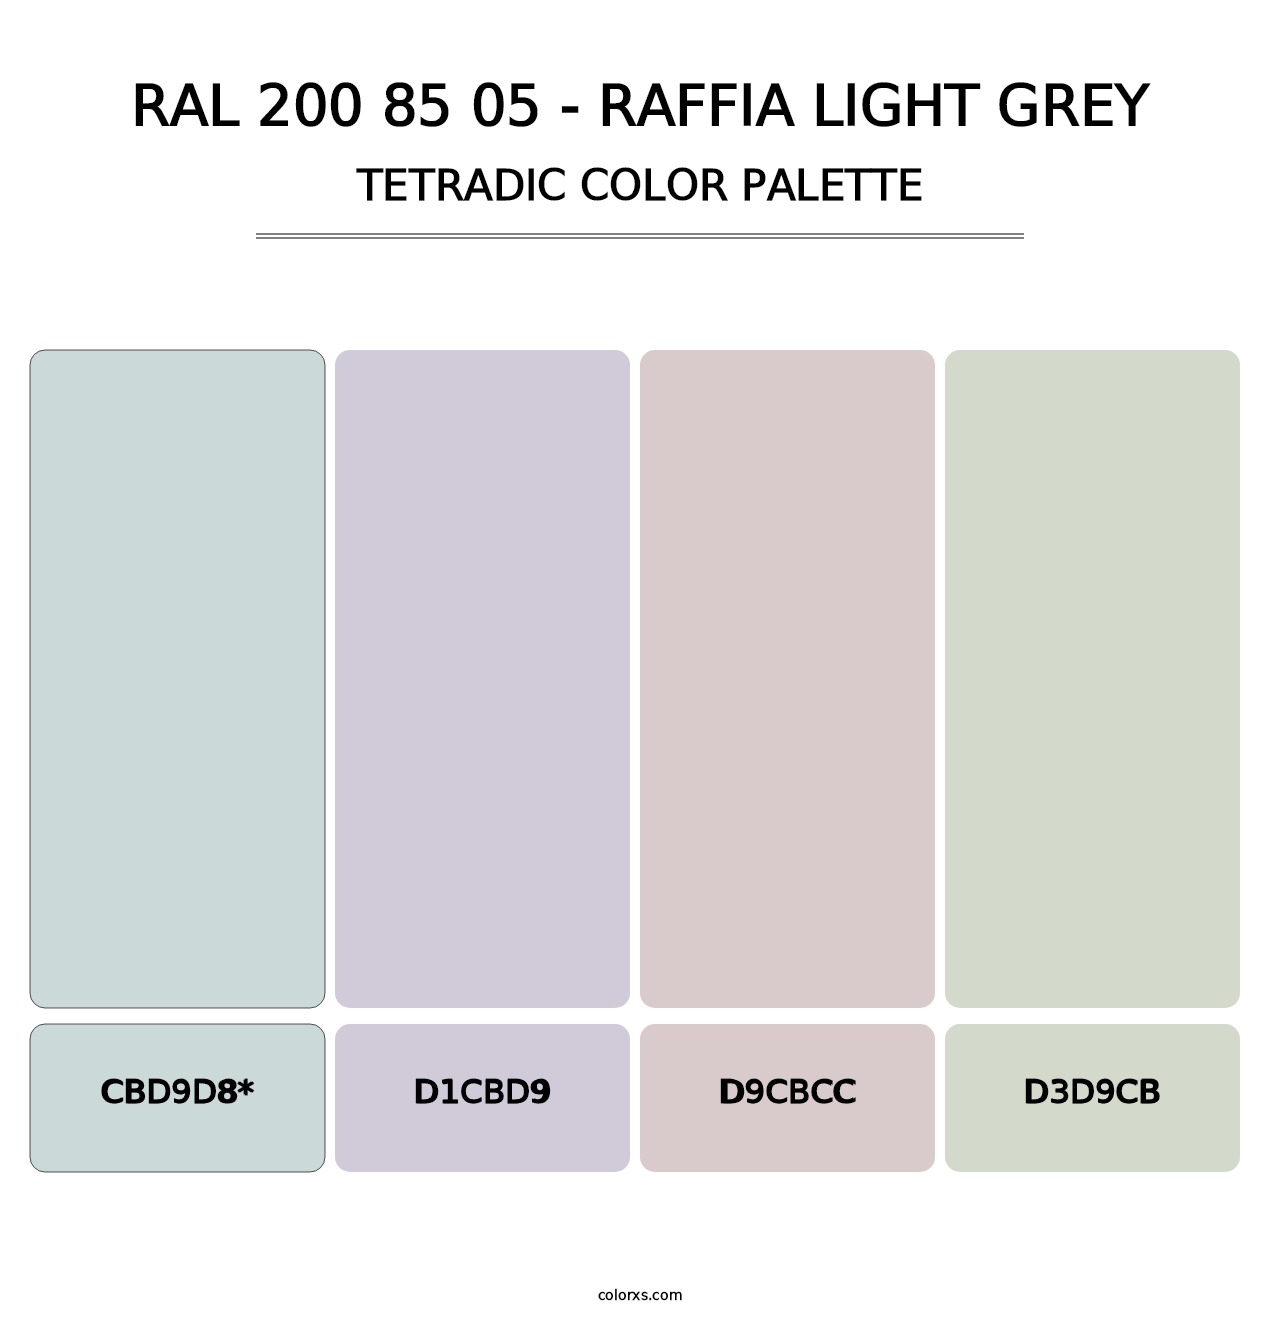 RAL 200 85 05 - Raffia Light Grey - Tetradic Color Palette